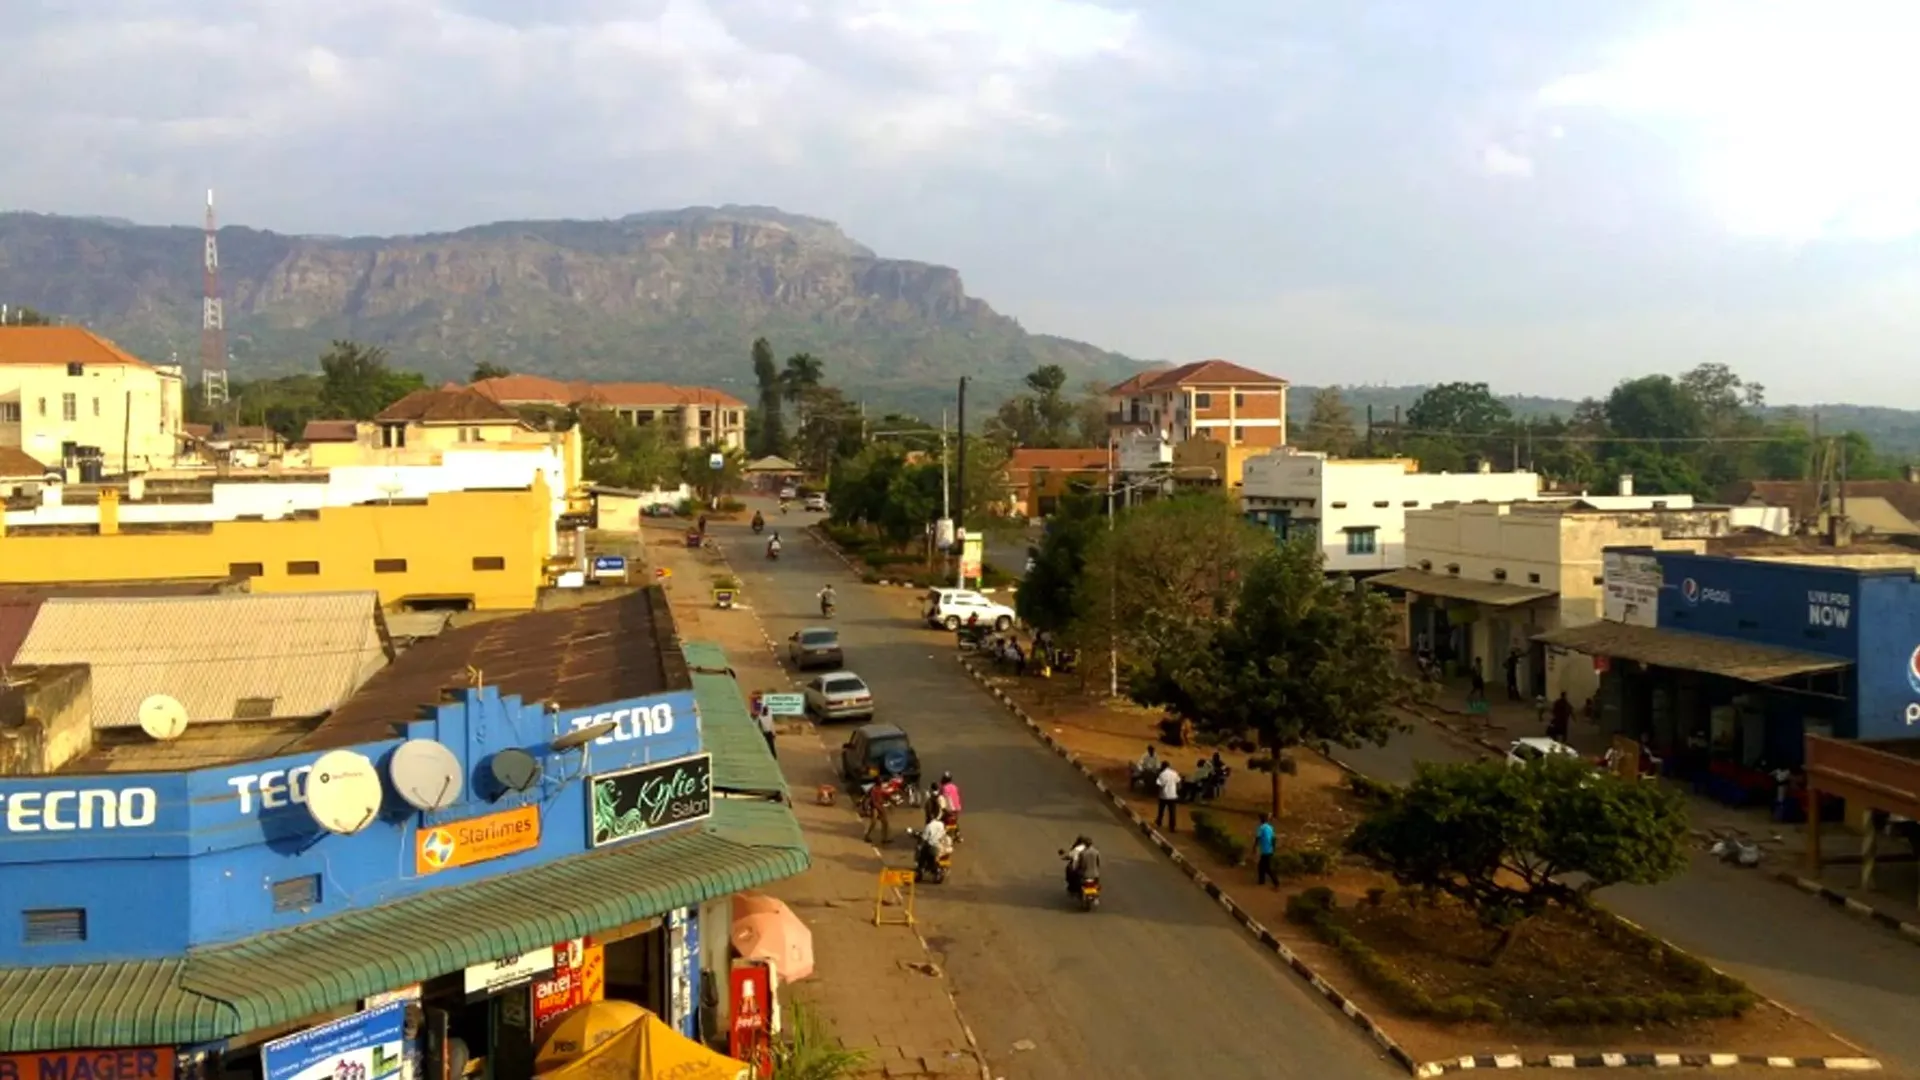 Mbale | Eastern Region, Uganda - Rated 4.3